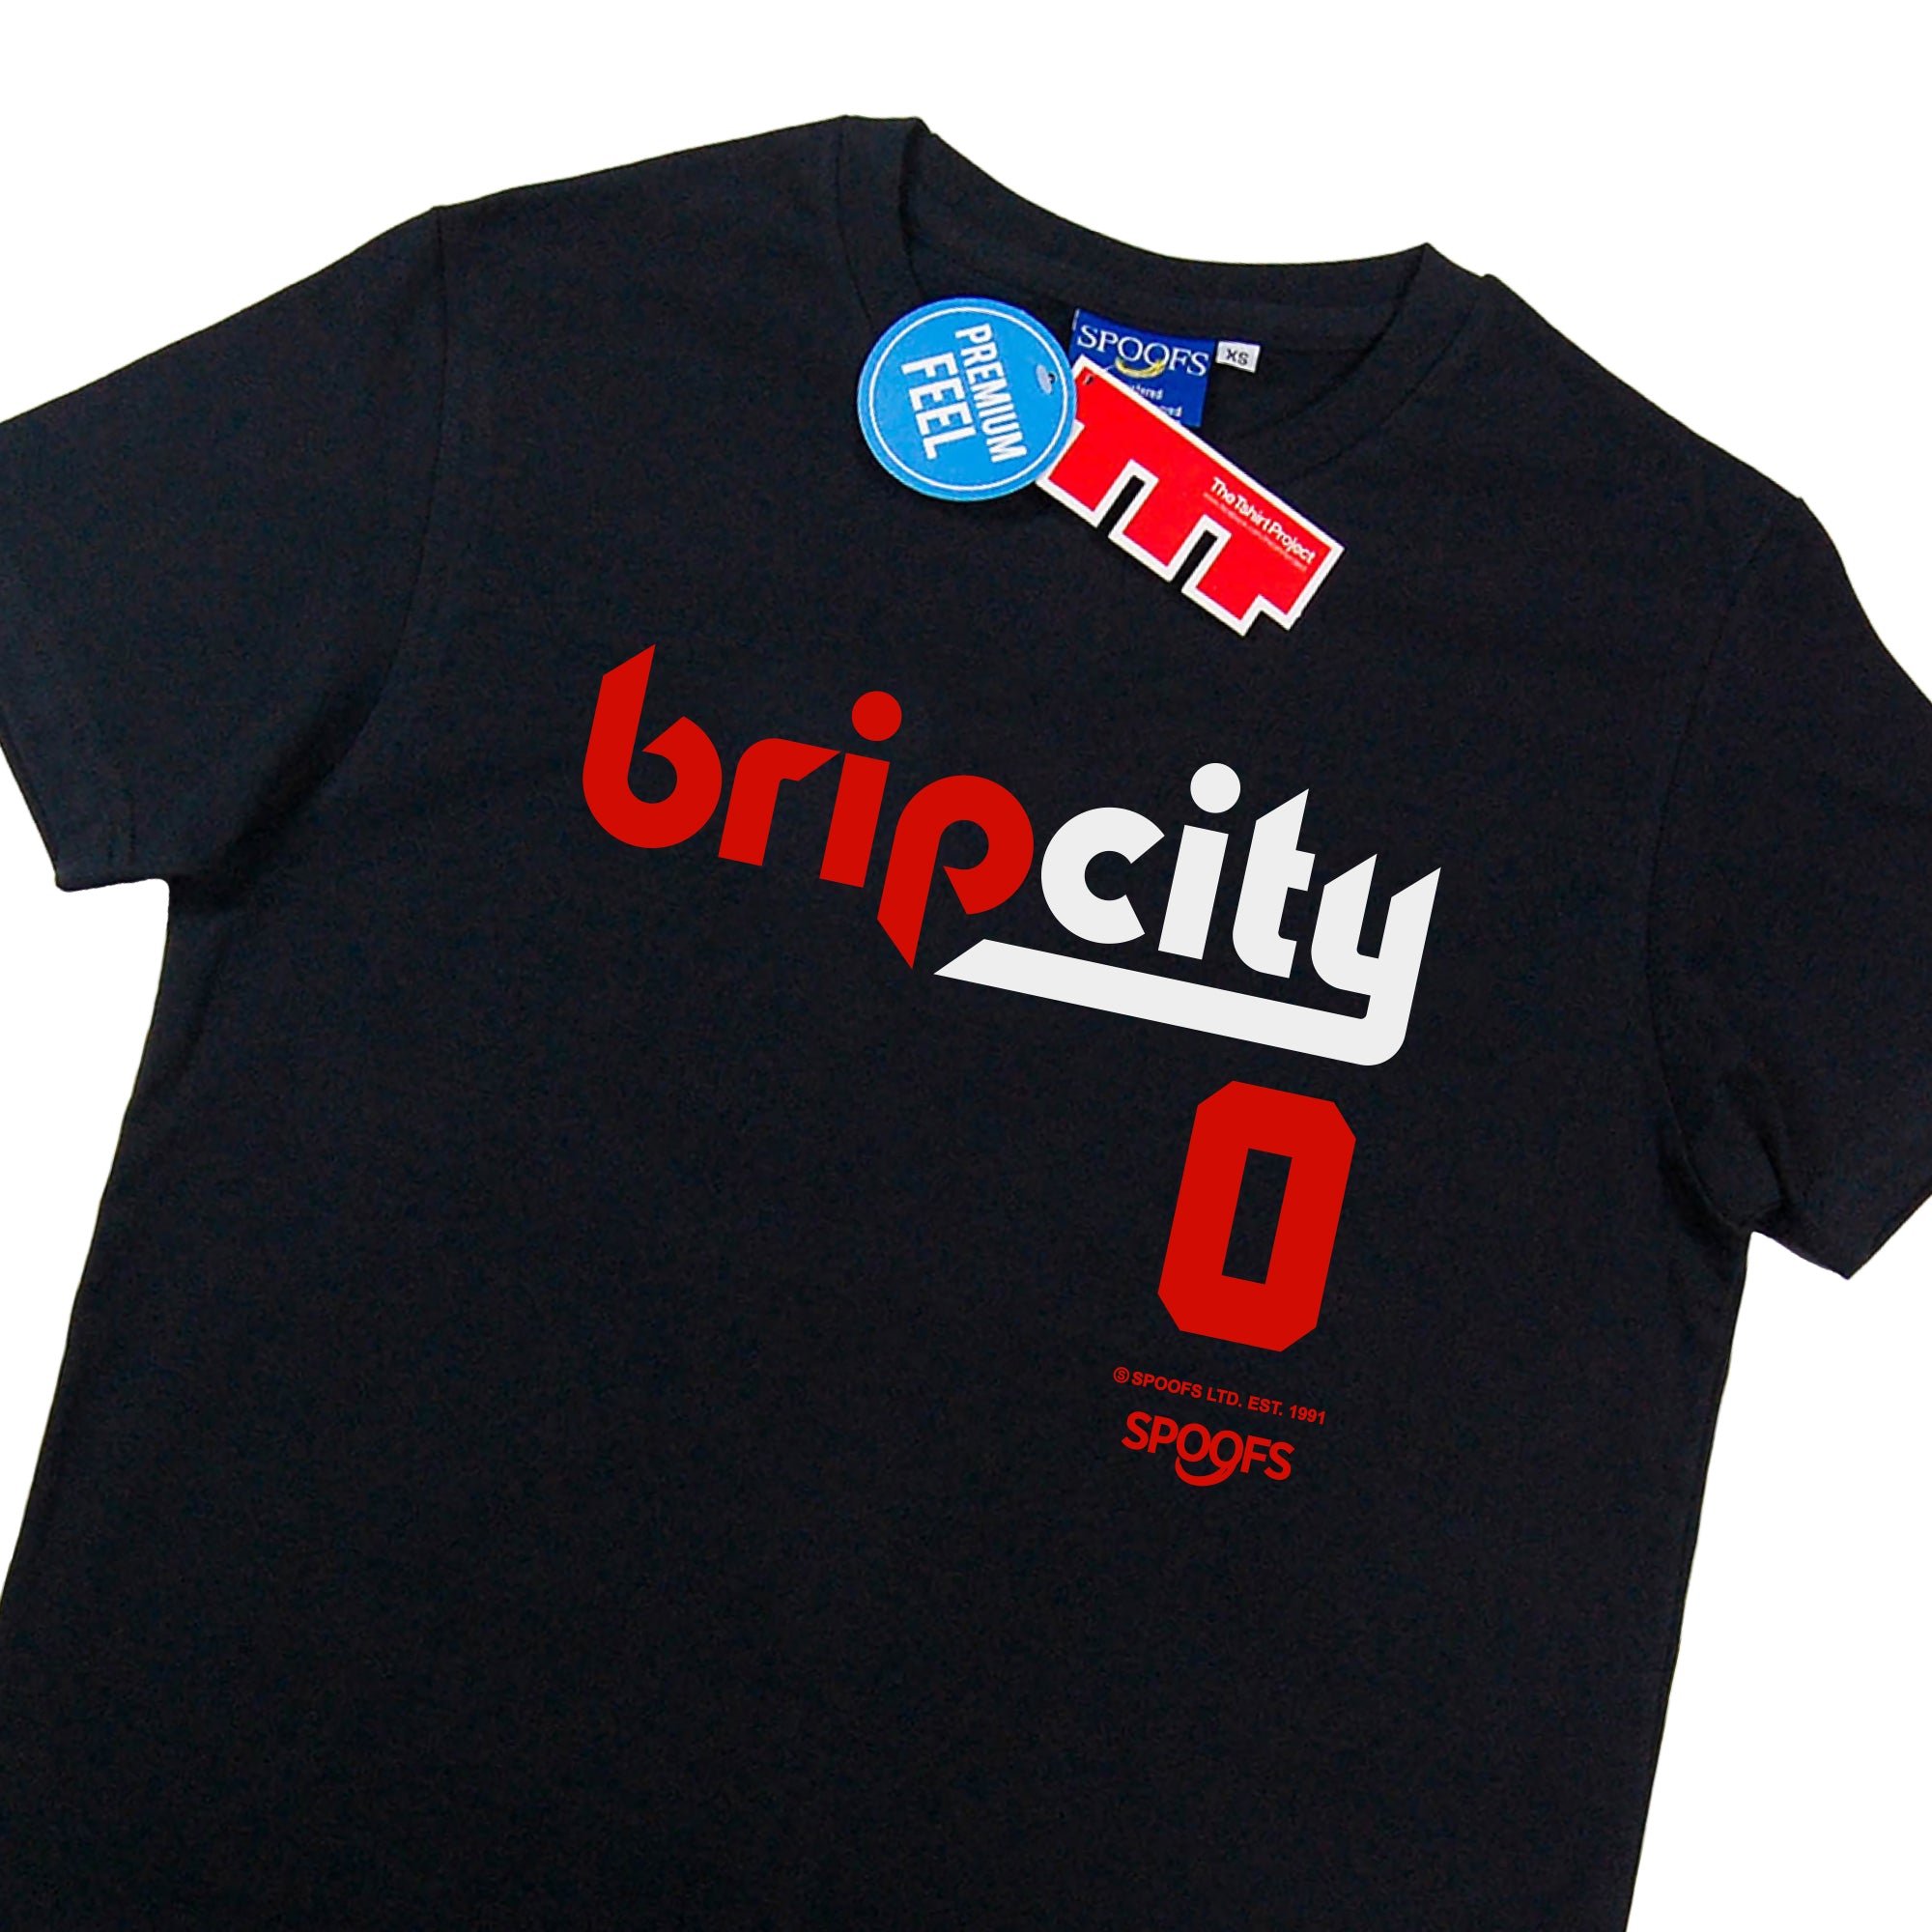 Brip City (Black)